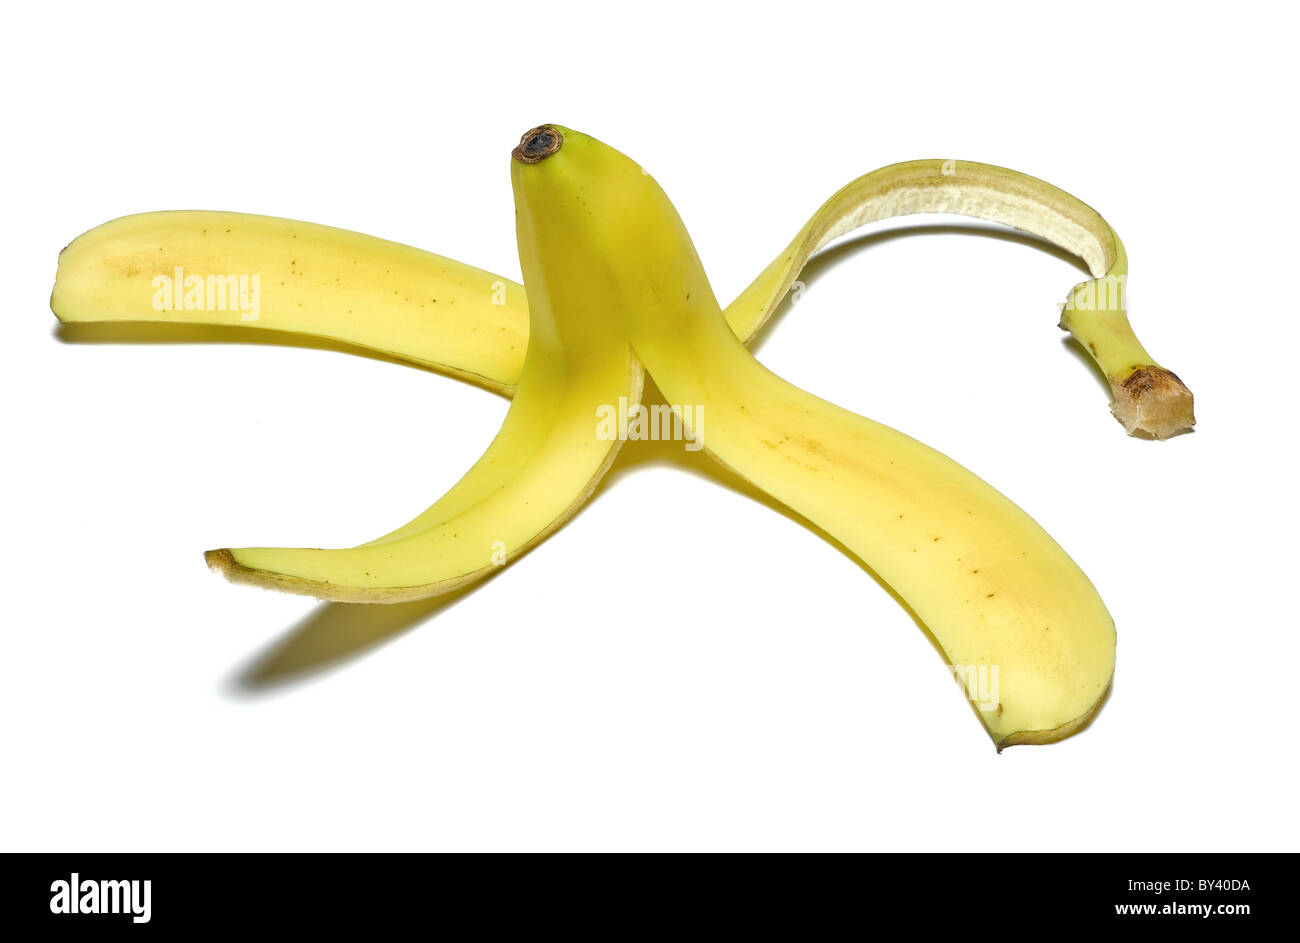 banana skin Stock Photo